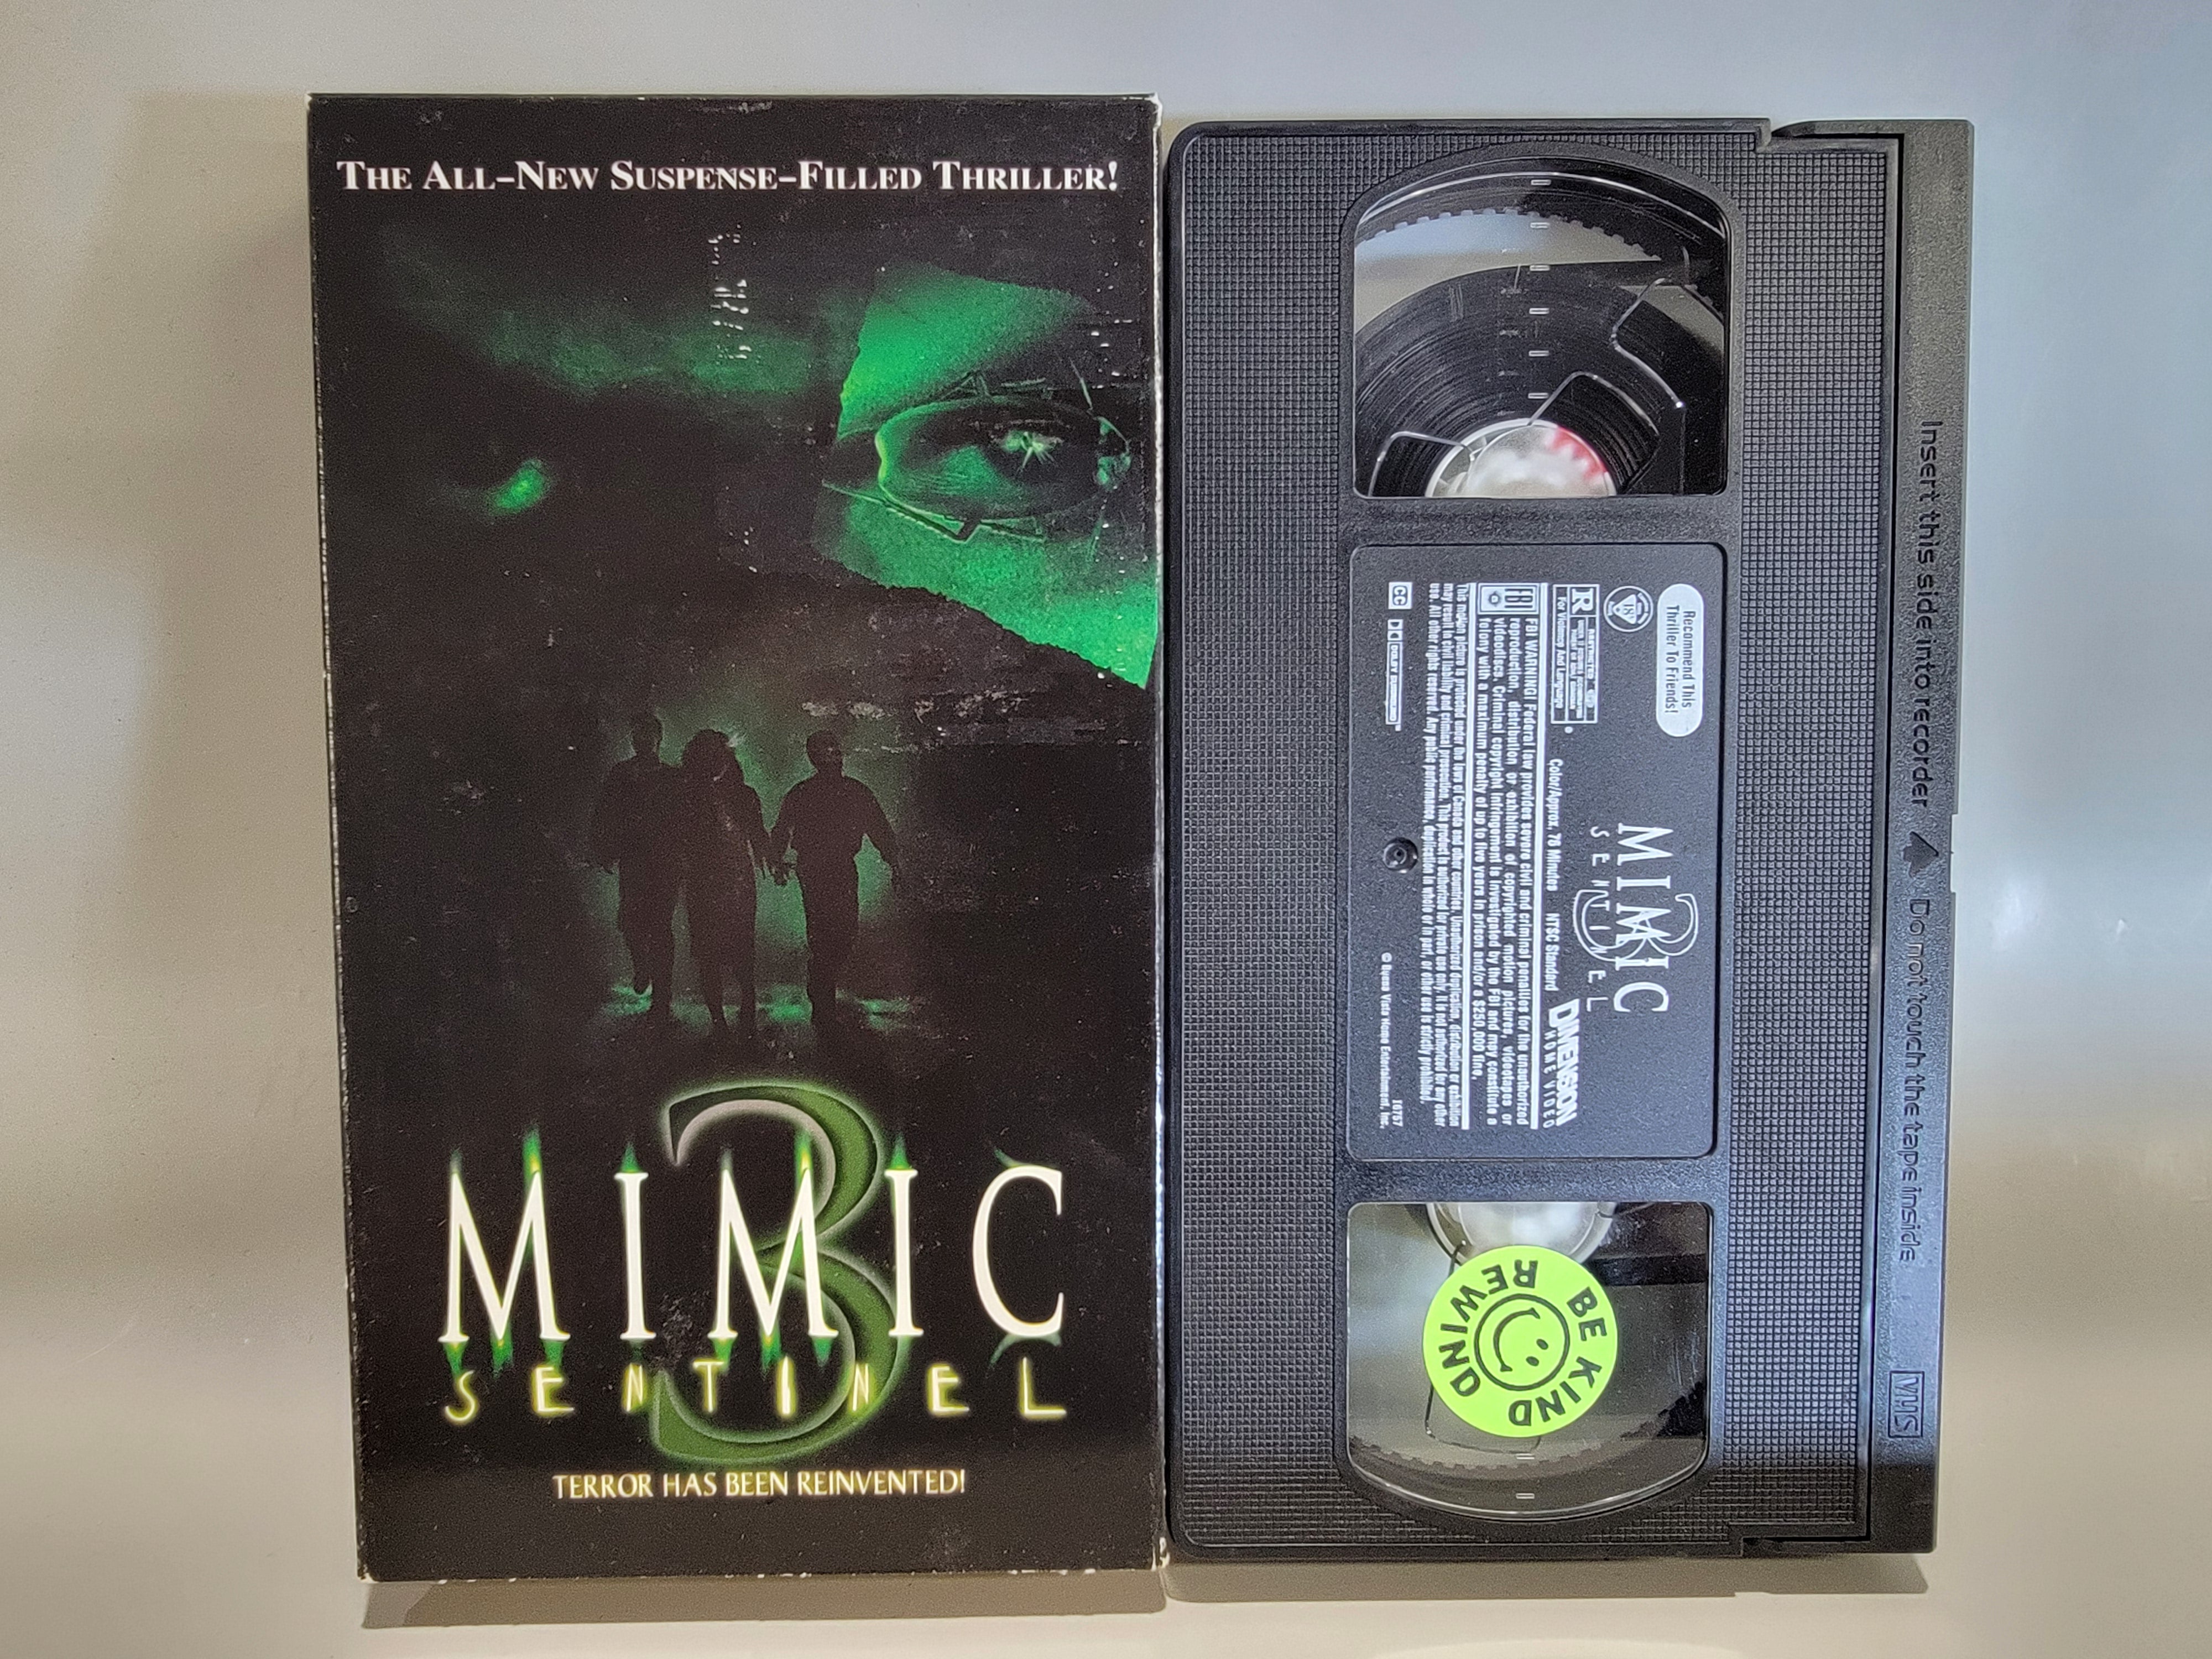 MIMIC 3: SENTINEL VHS [USED]